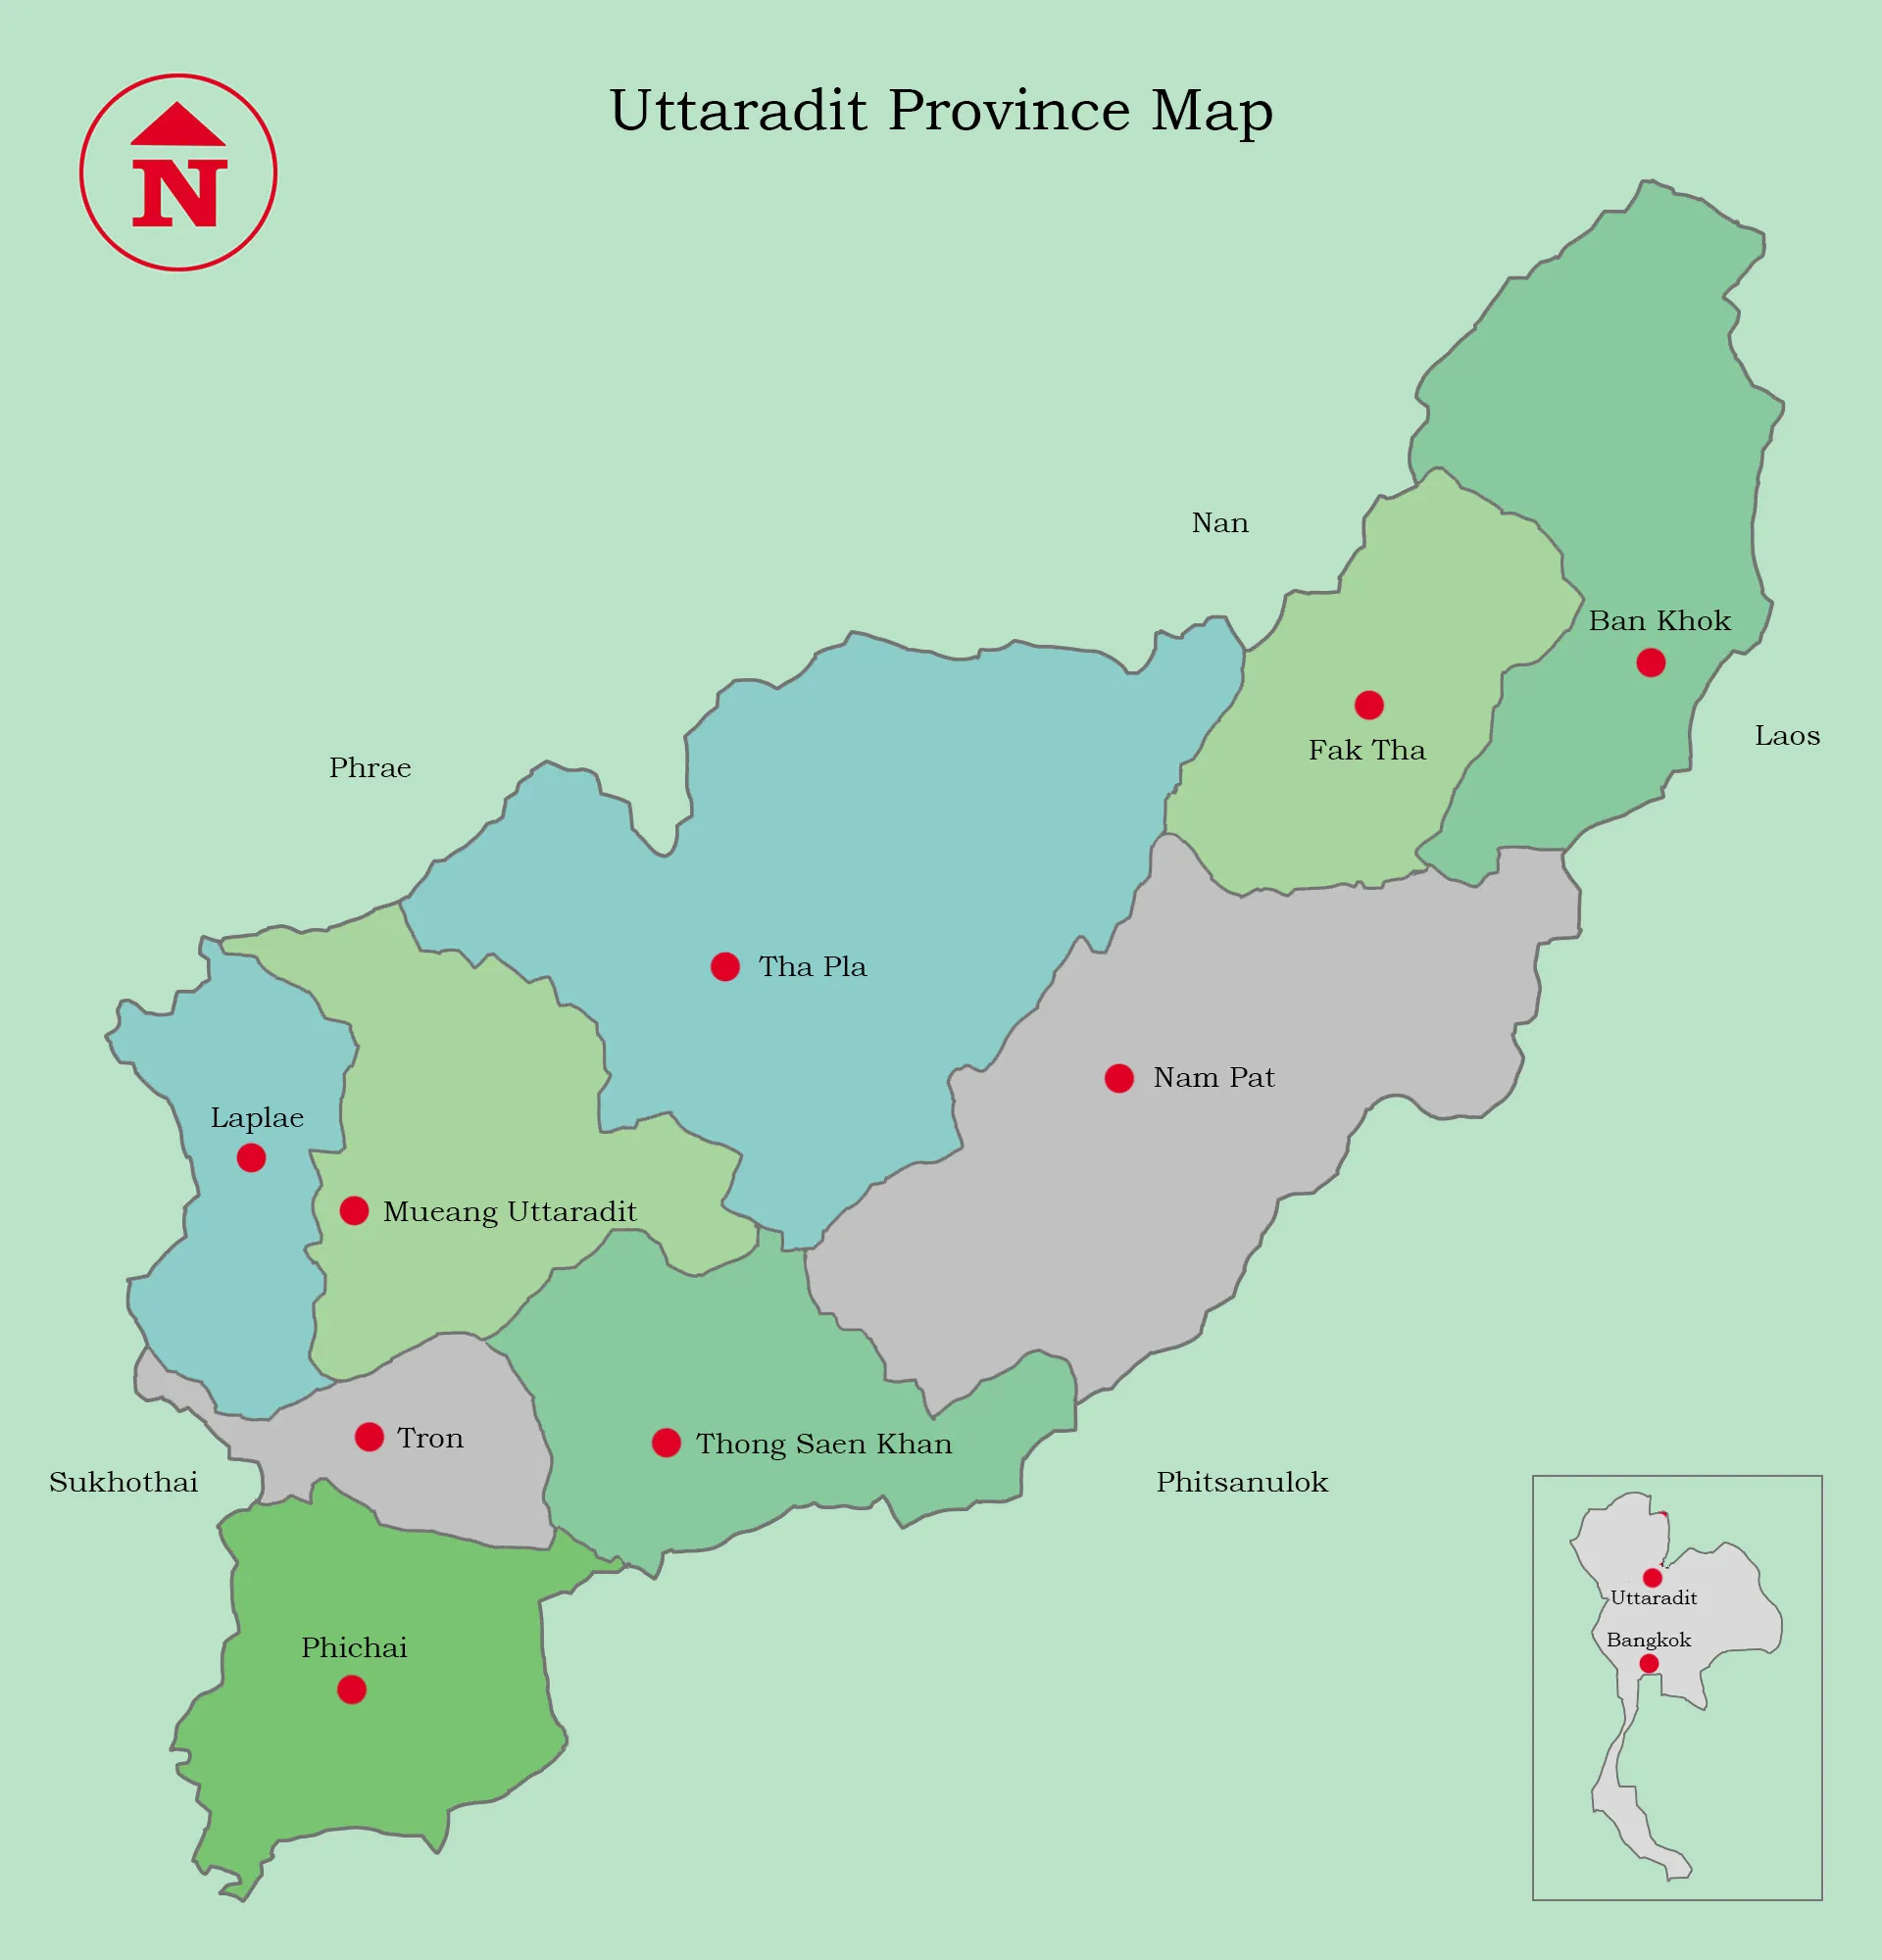 Uttaradit Province Map